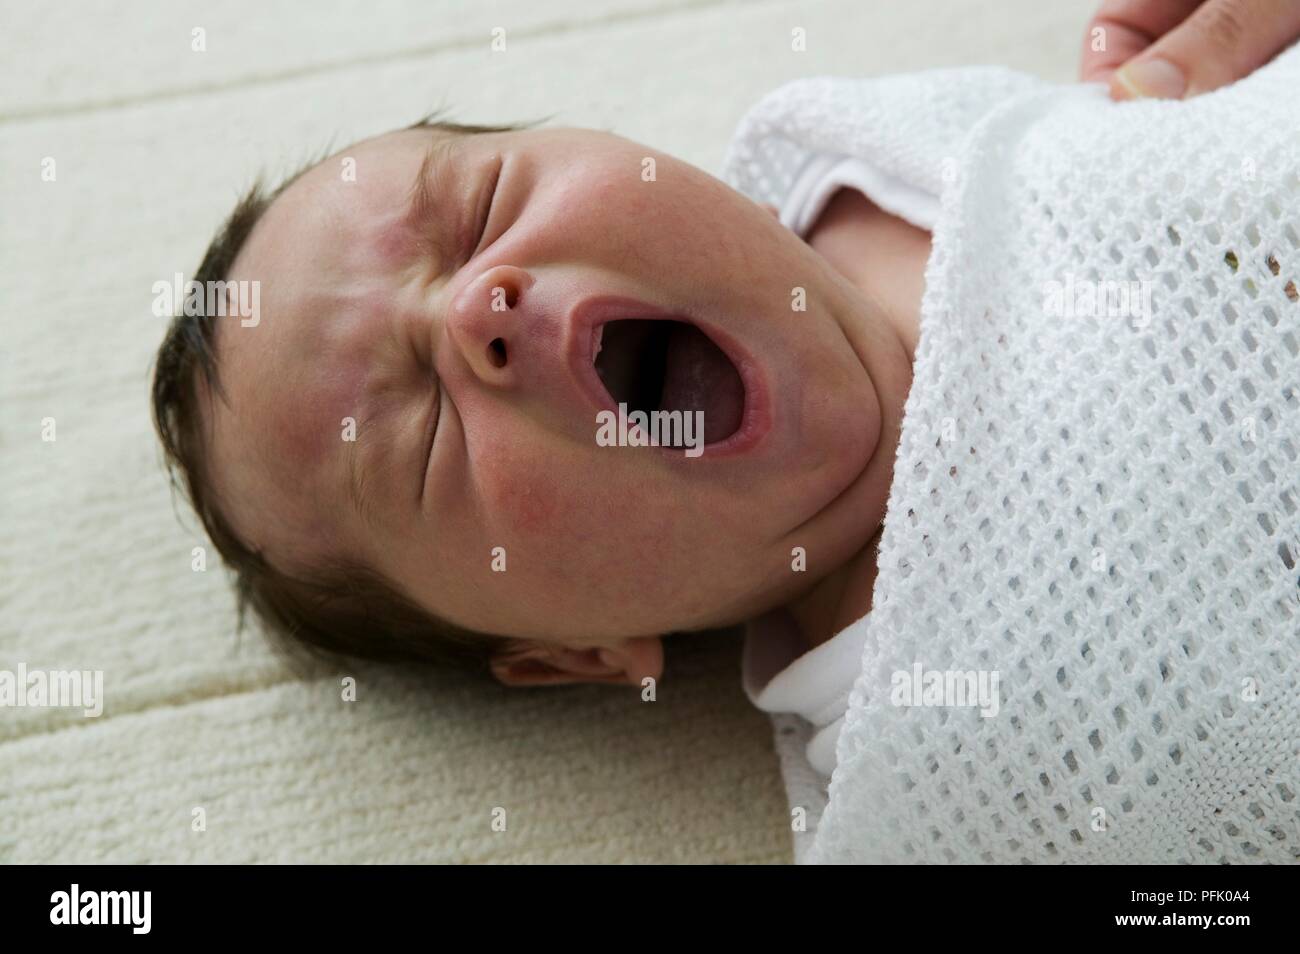 Baby boy swaddled in cellular blanket, yawning, close-up Stock Photo